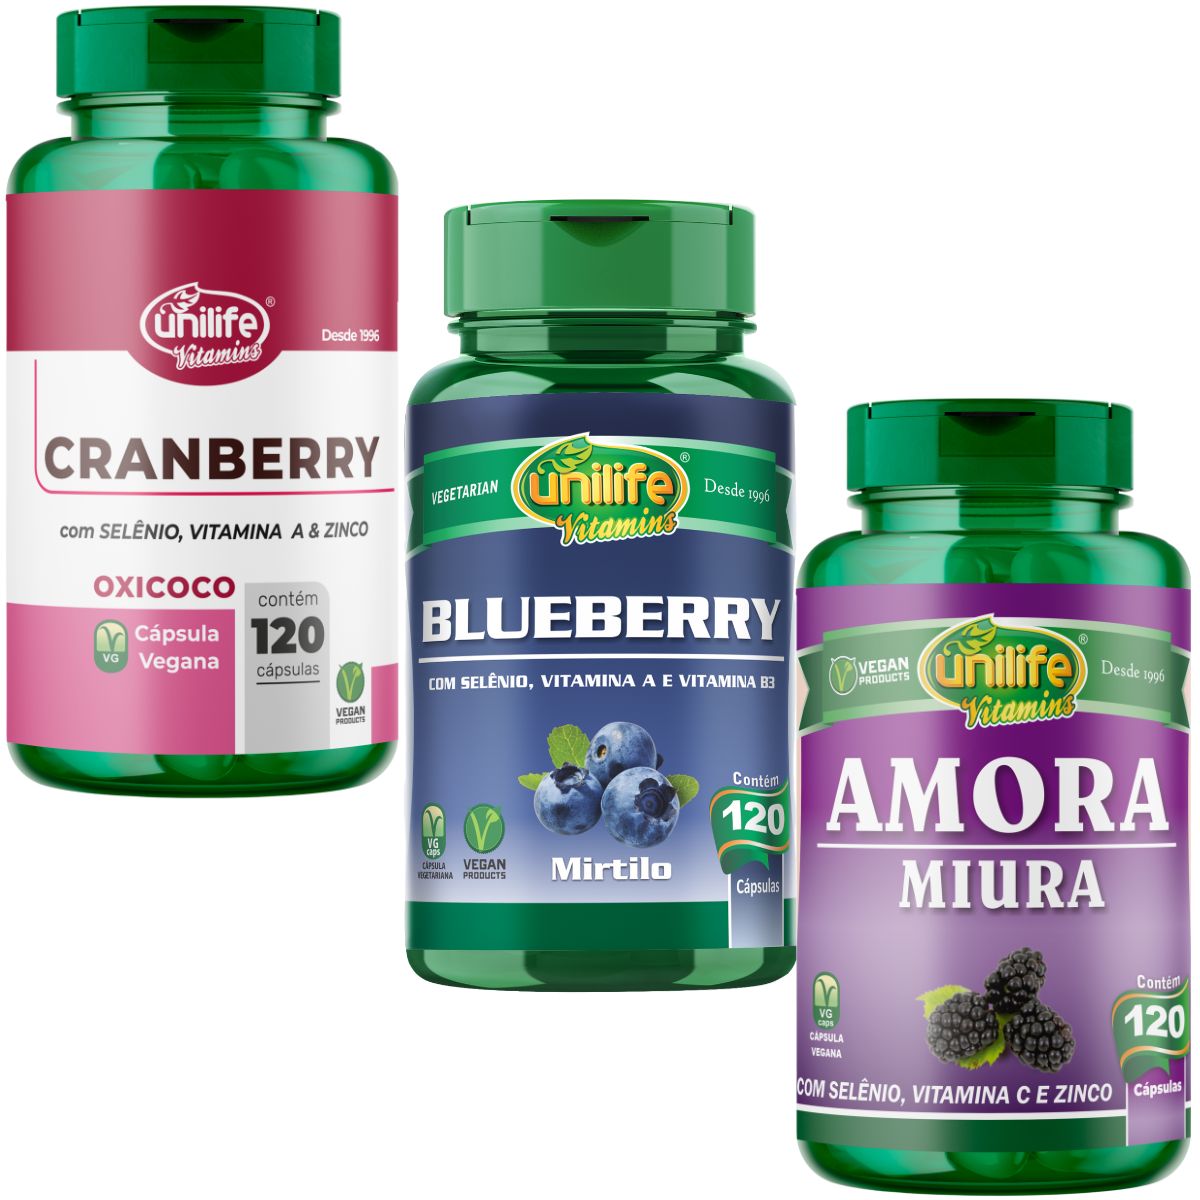 Kit Polifenóis - Amora Miura + Blueberry + Cranberry - Unilife 120 Cápsulas